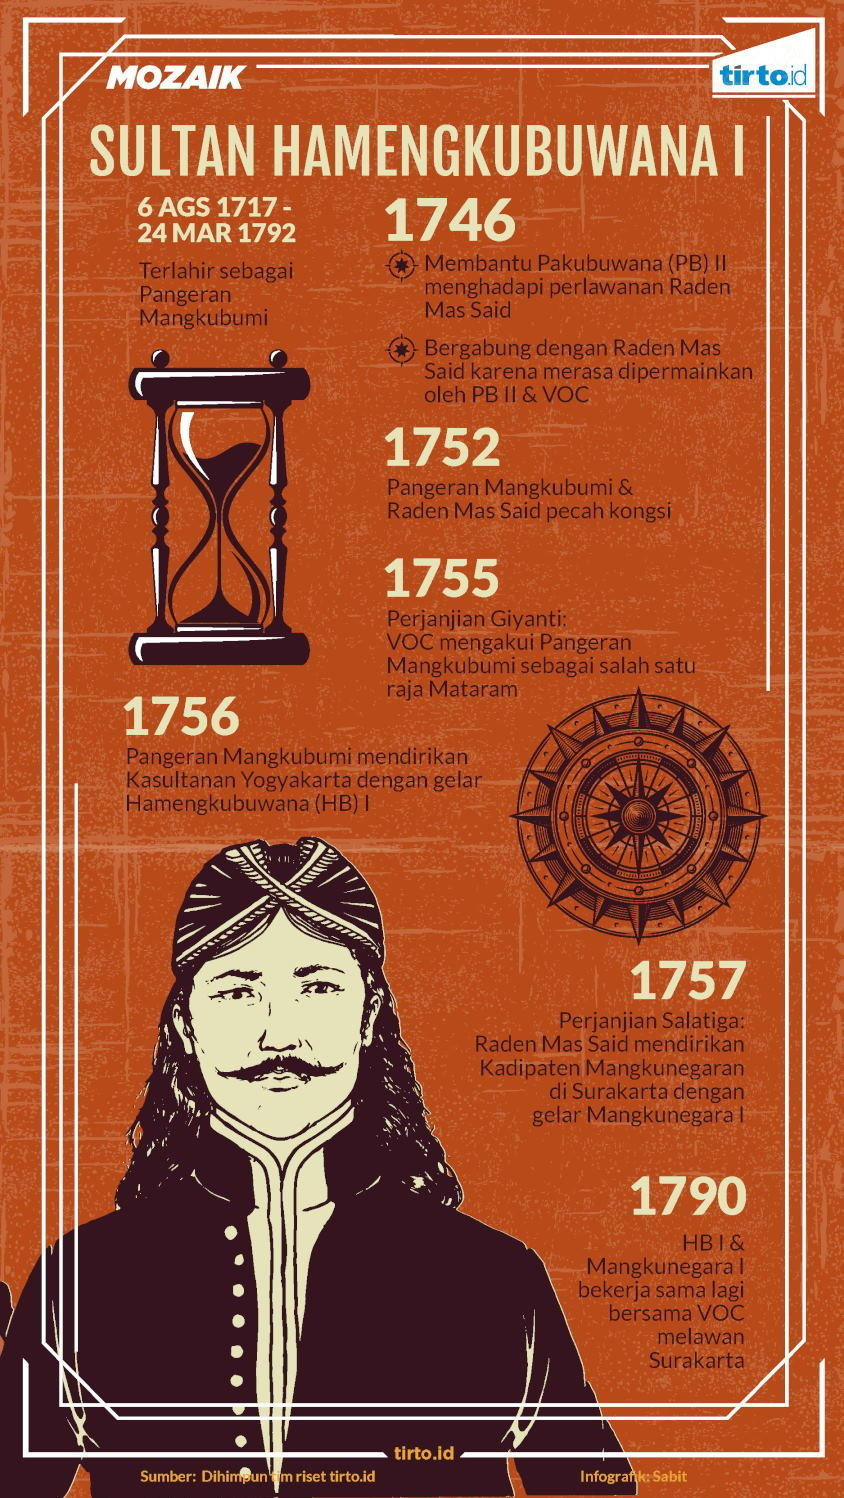 Infografik mozaik sultan hamengkubuwana I